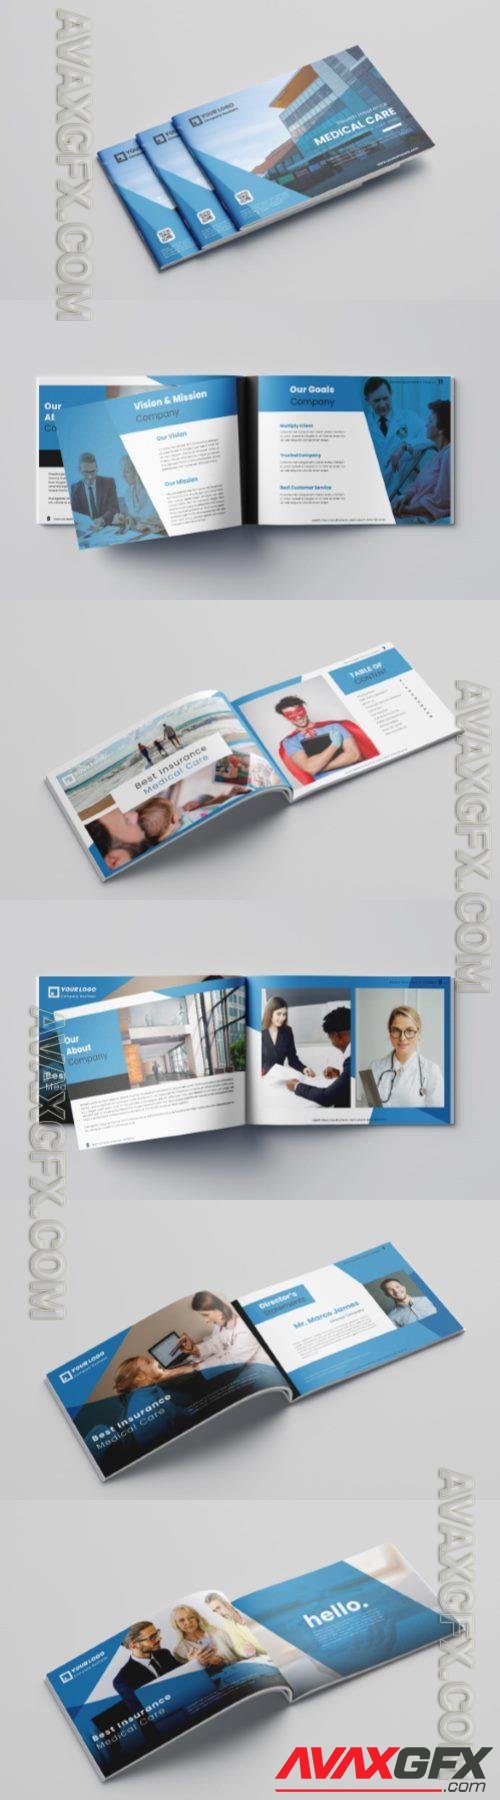 Health Insurance Brochure Vol.2 BT5FZ3T